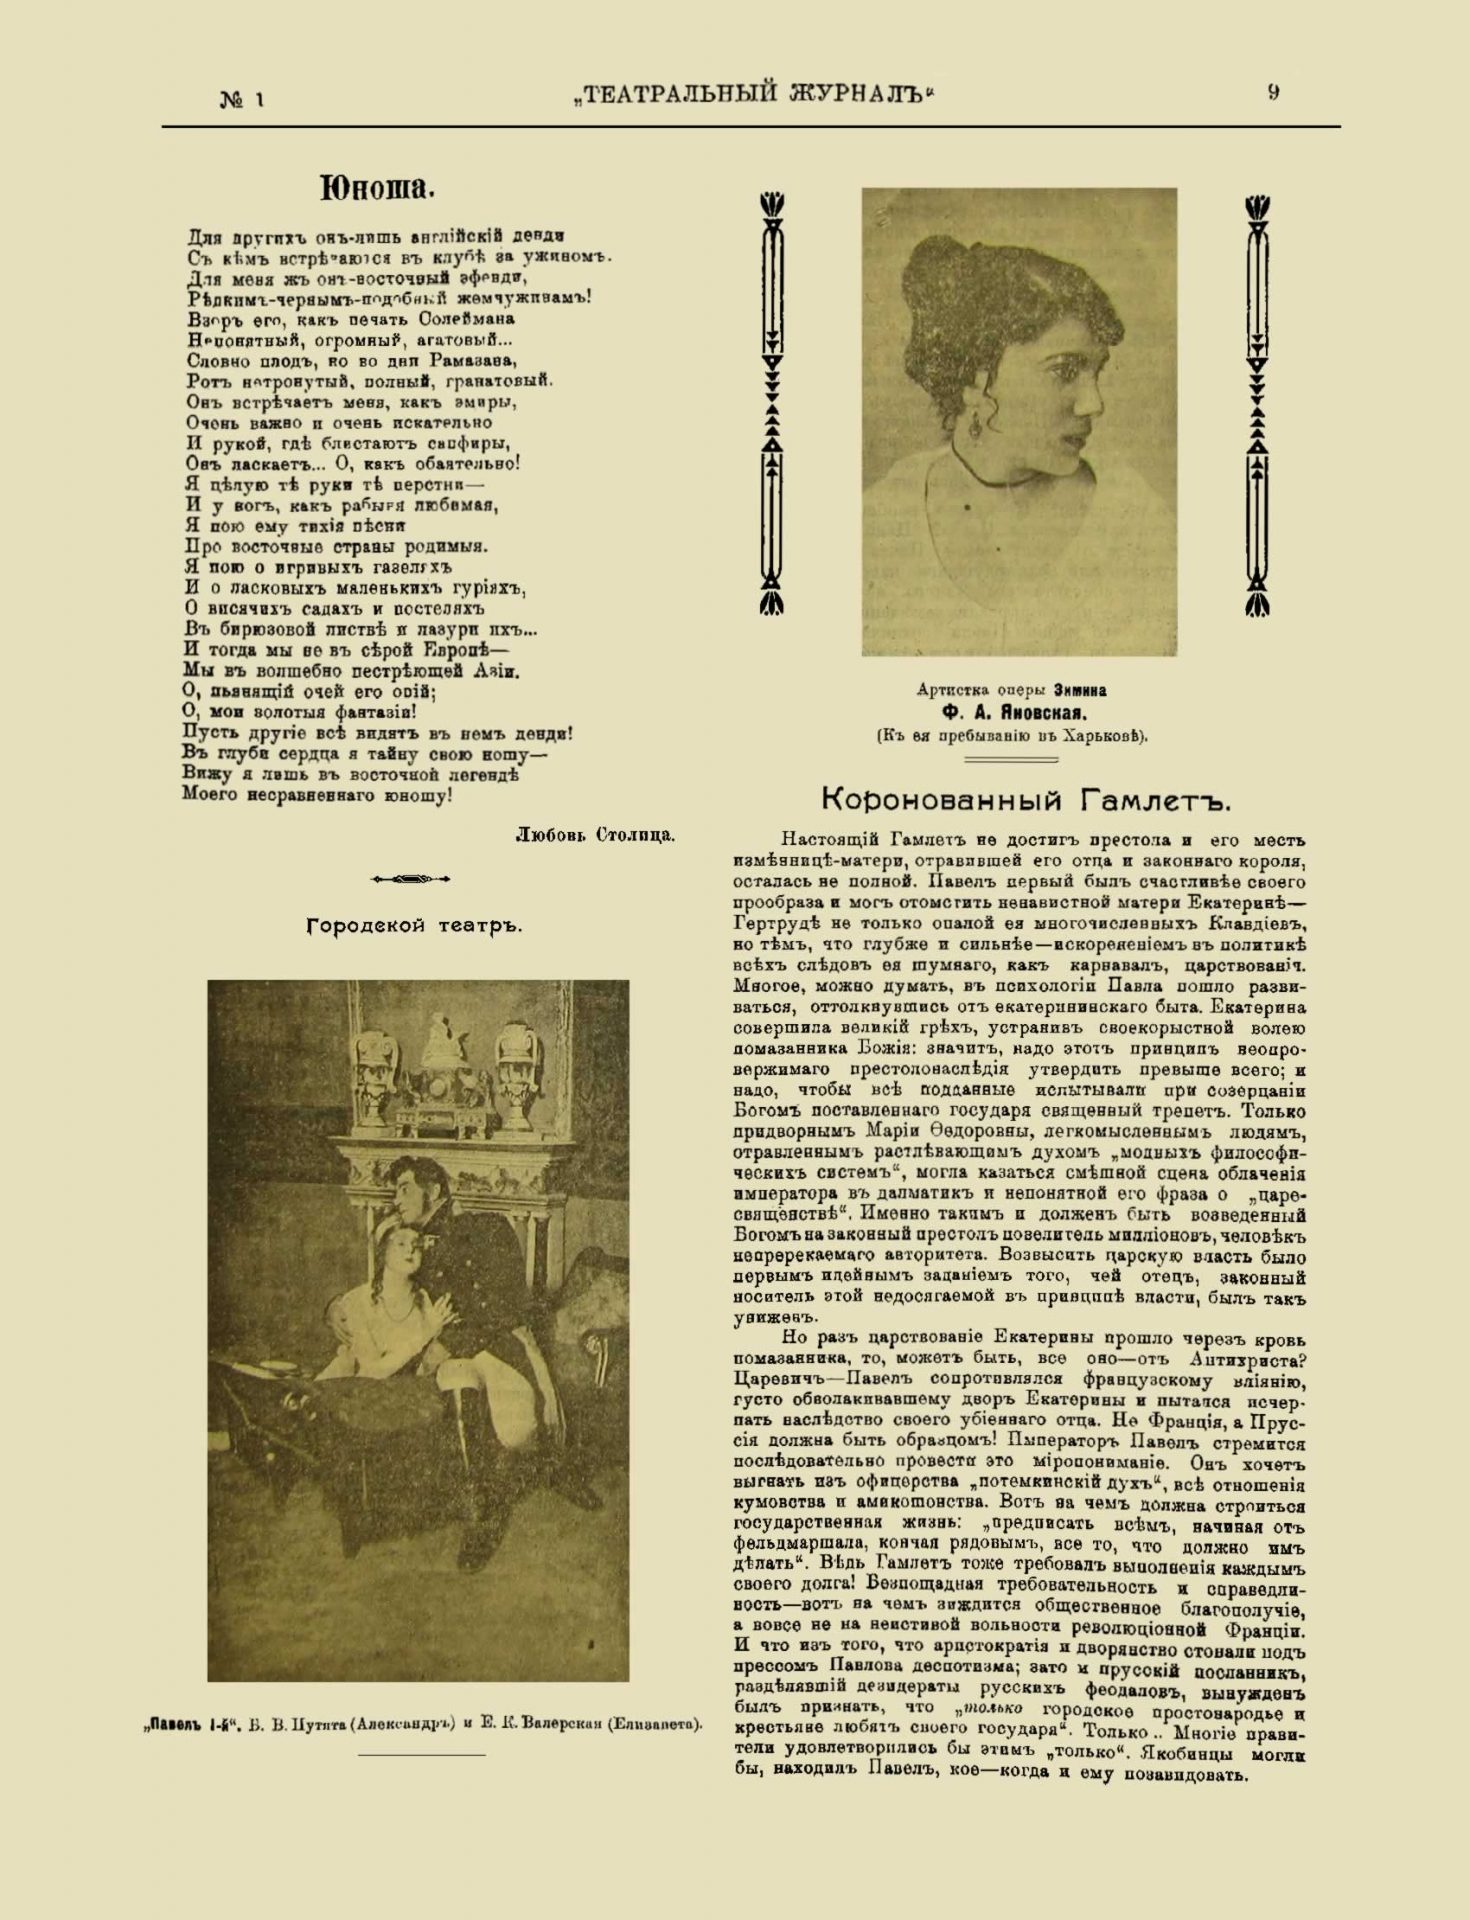 Театральный журнал_1918_№1